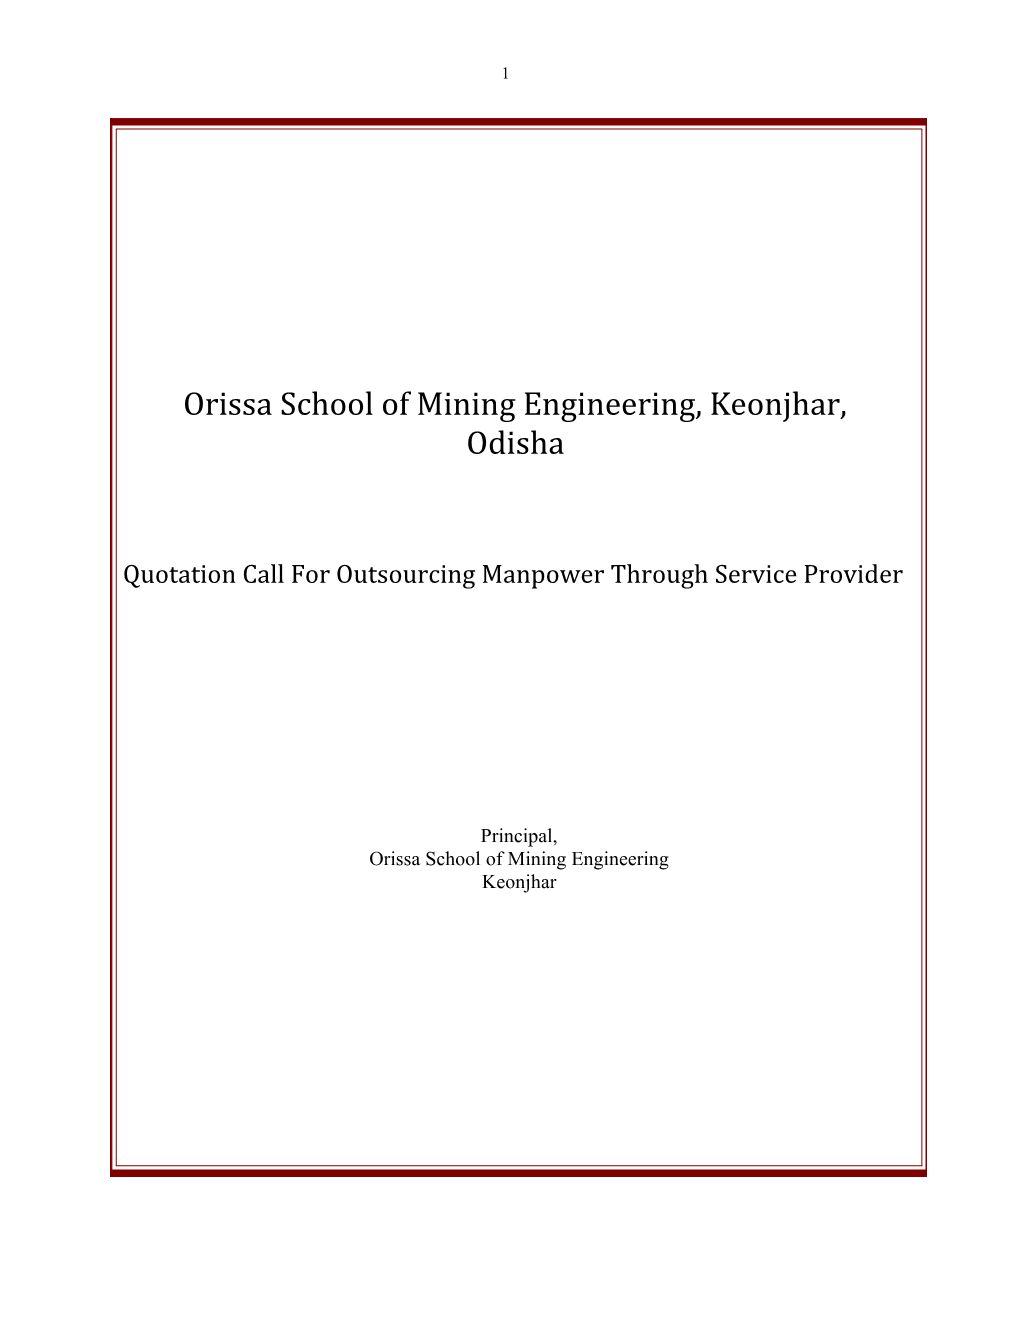 Orissa School of Mining Engineering, Keonjhar, Odisha